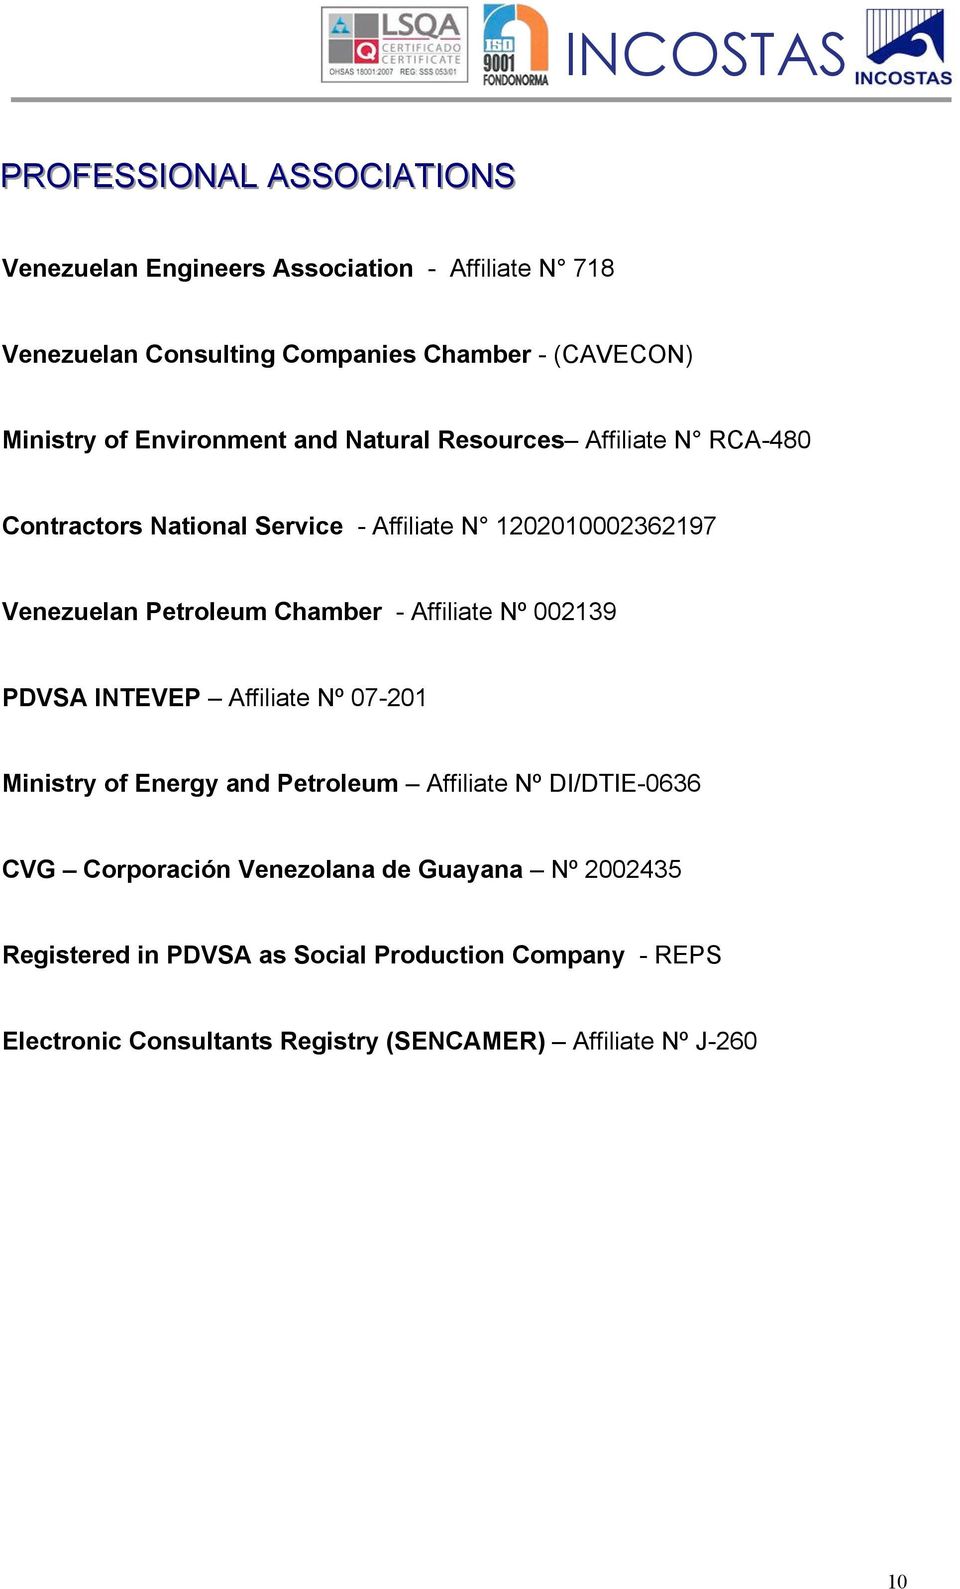 Chamber - Affiliate Nº 002139 PDVSA INTEVEP Affiliate Nº 07-201 Ministry of Energy and Petroleum Affiliate Nº DI/DTIE-0636 CVG Corporación